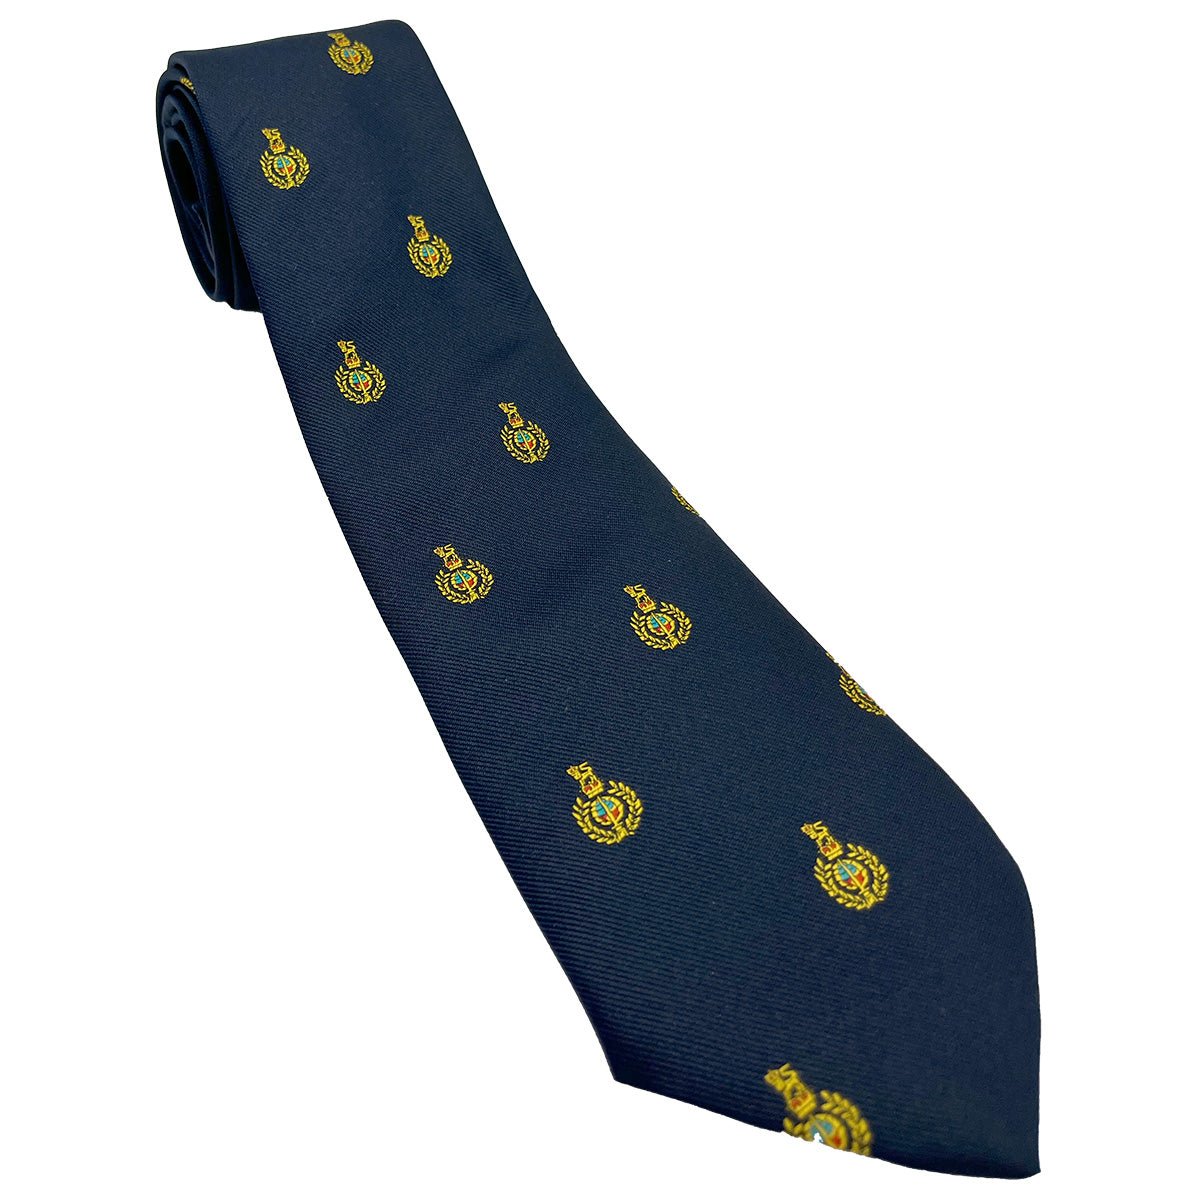 Royal Marines Commando Crest Regimental Polyester Tie - John Bull Clothing